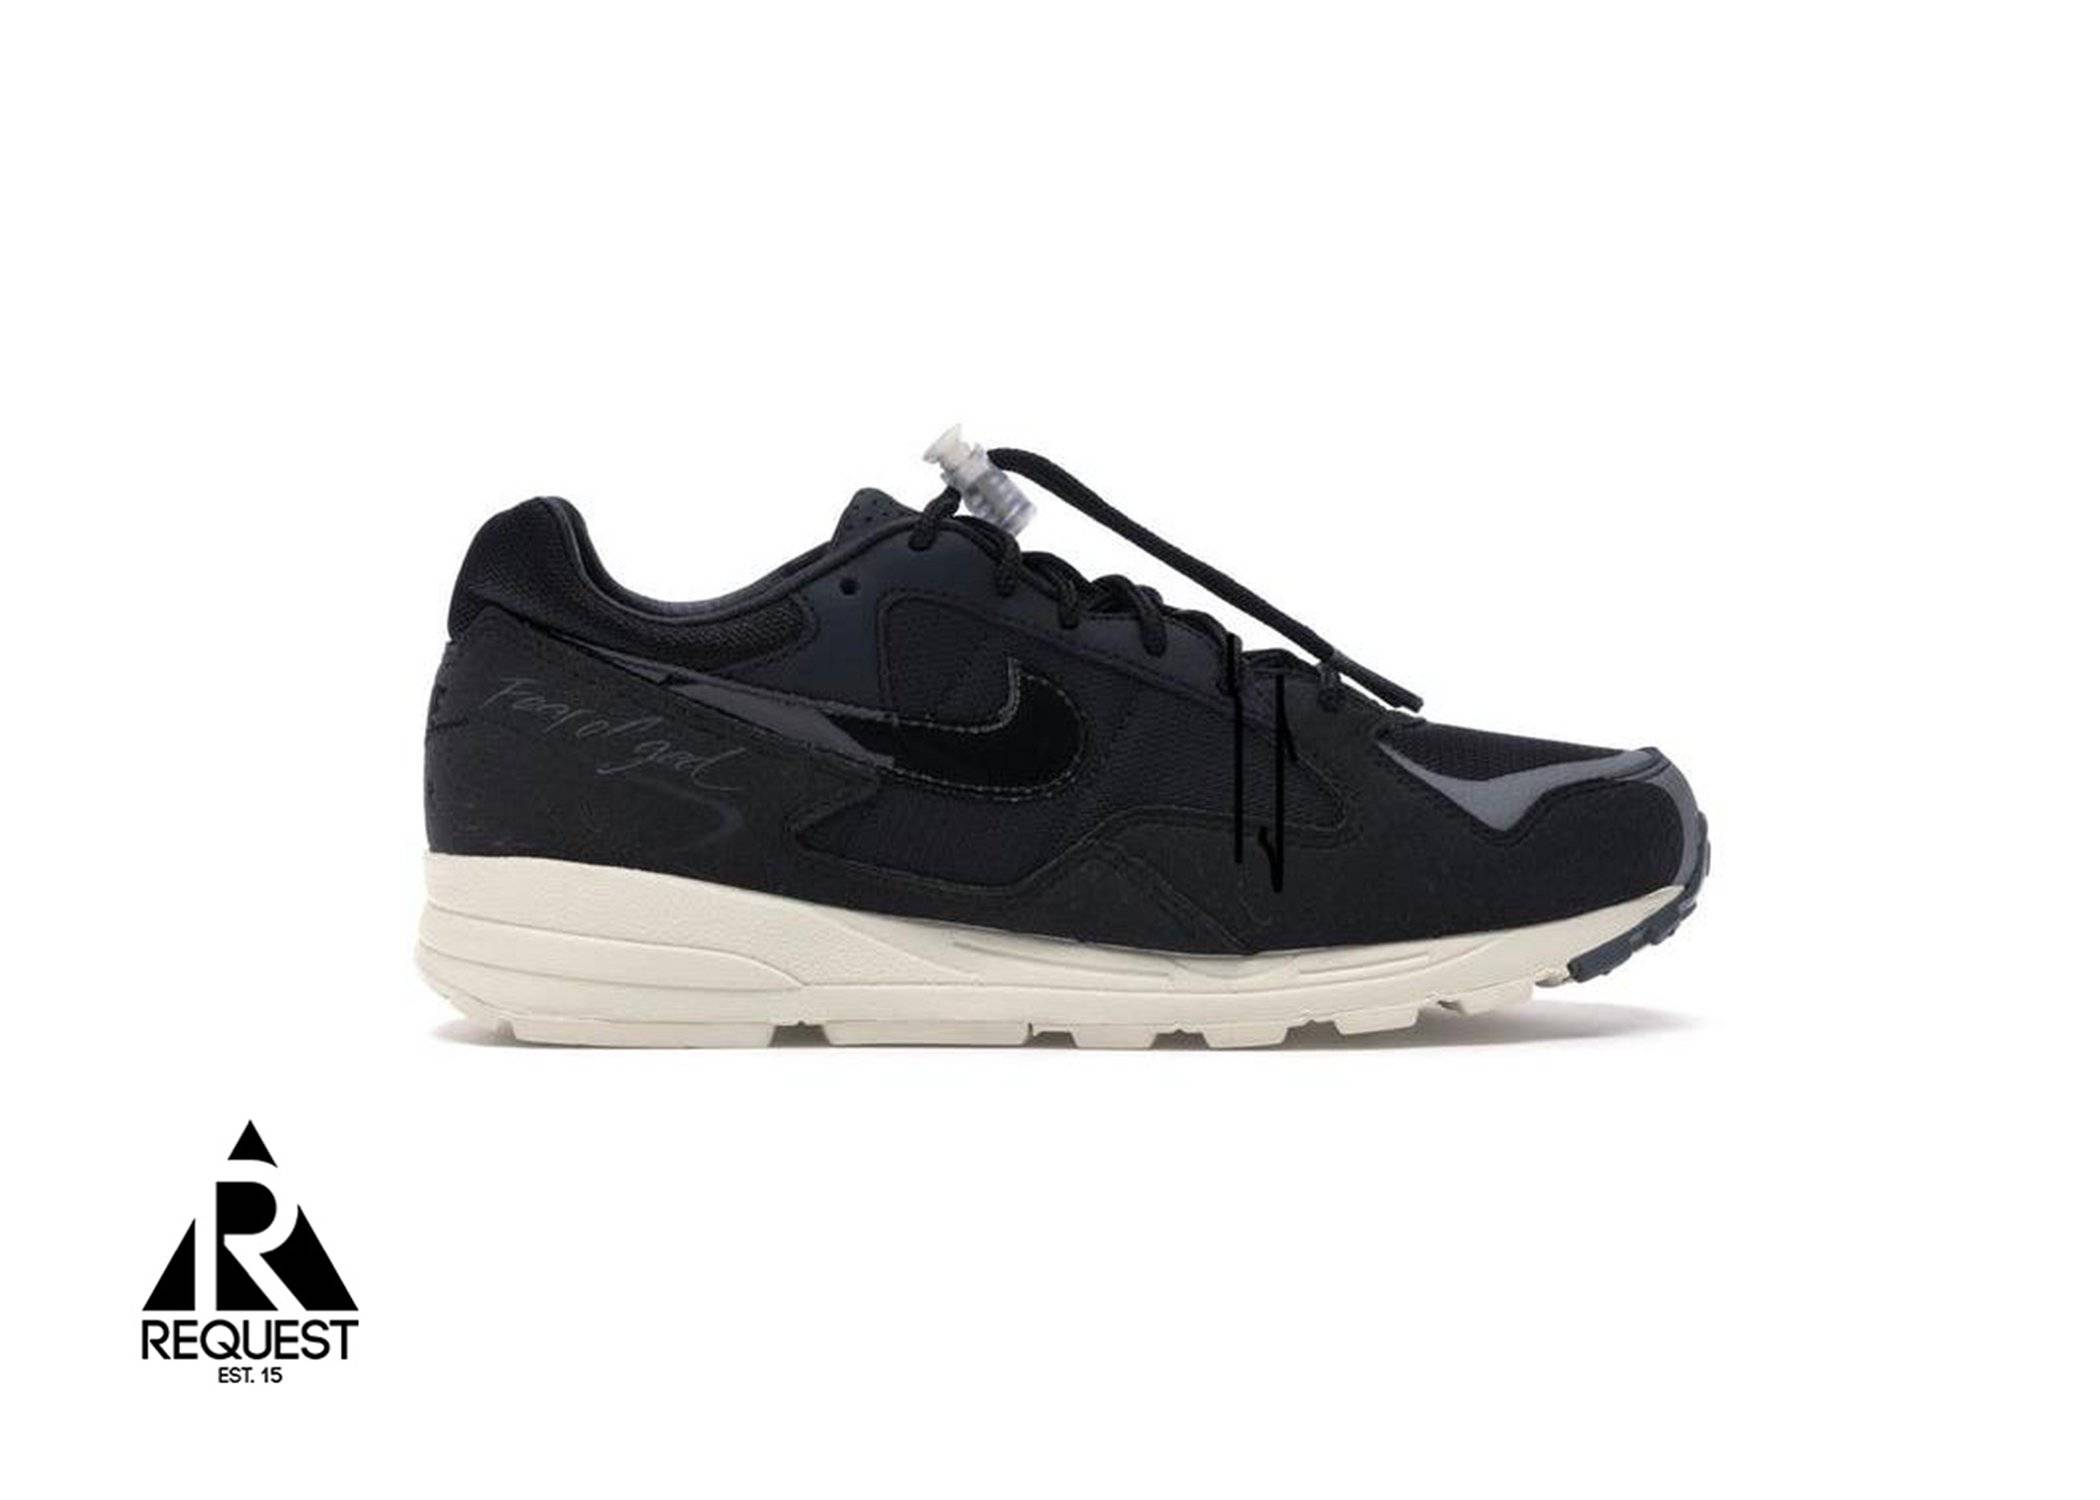 Nike Air Skylon II “Black”